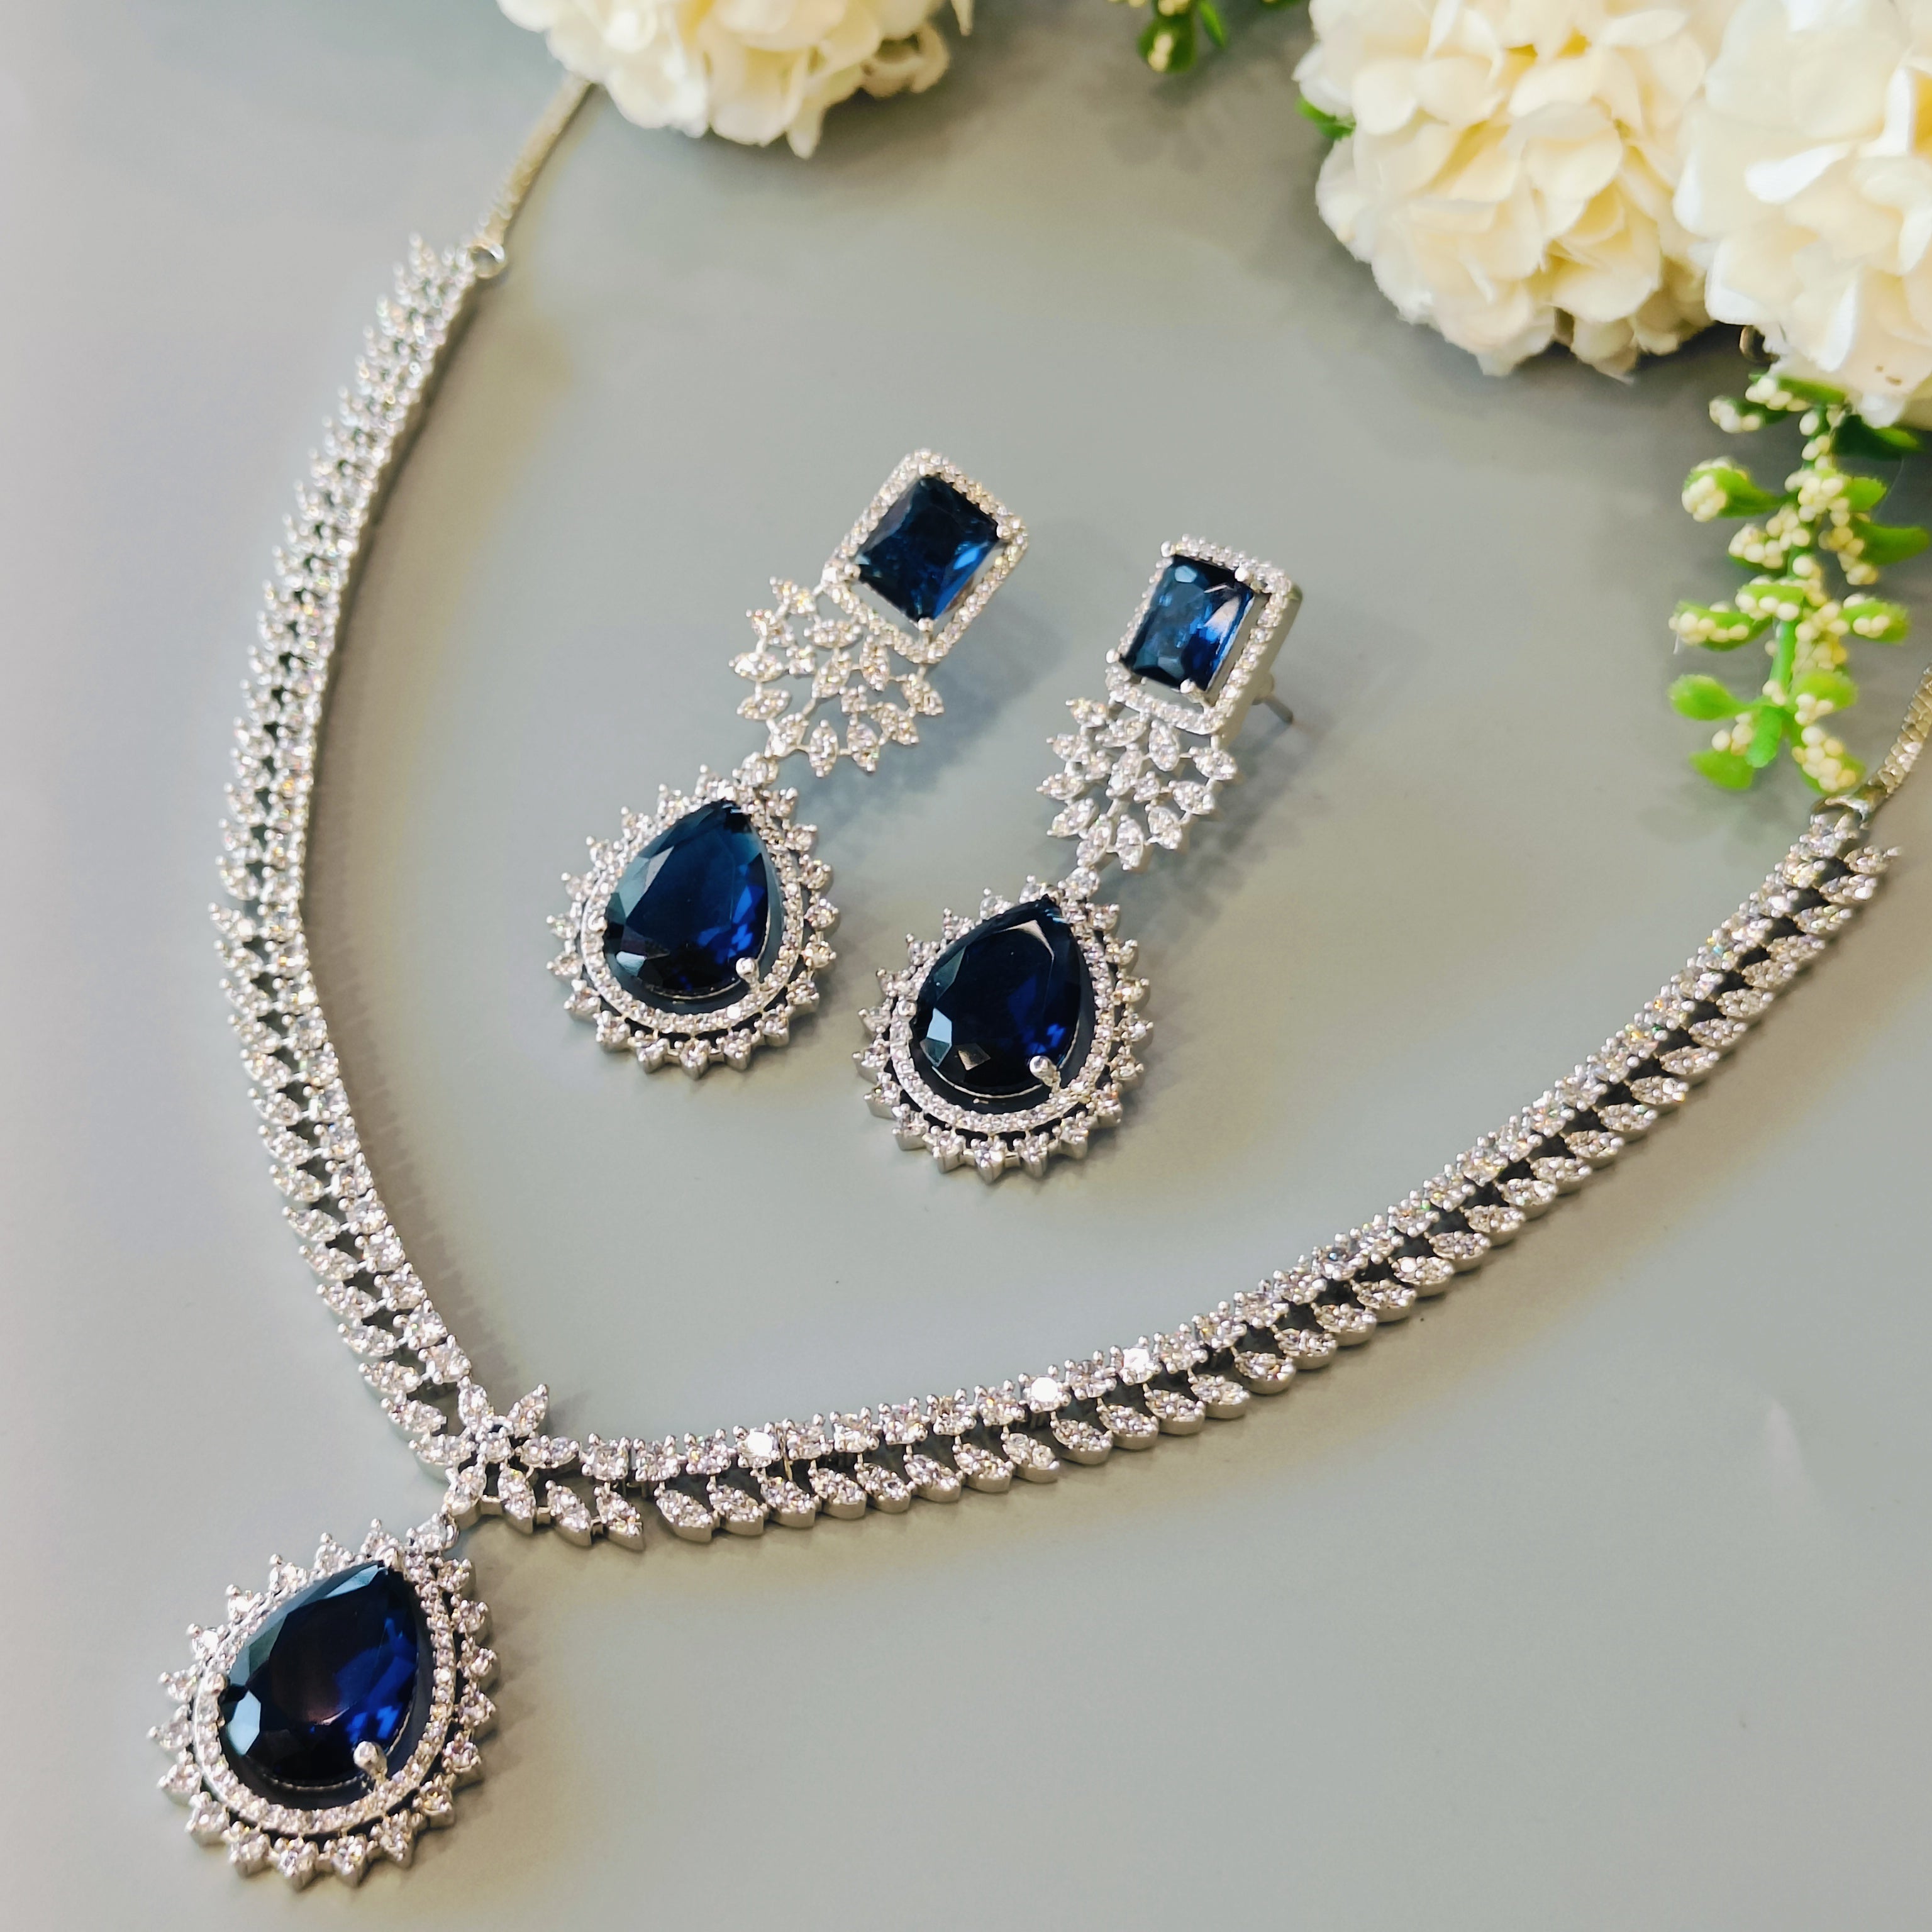 Ad Anaysha neckpiece - Blue